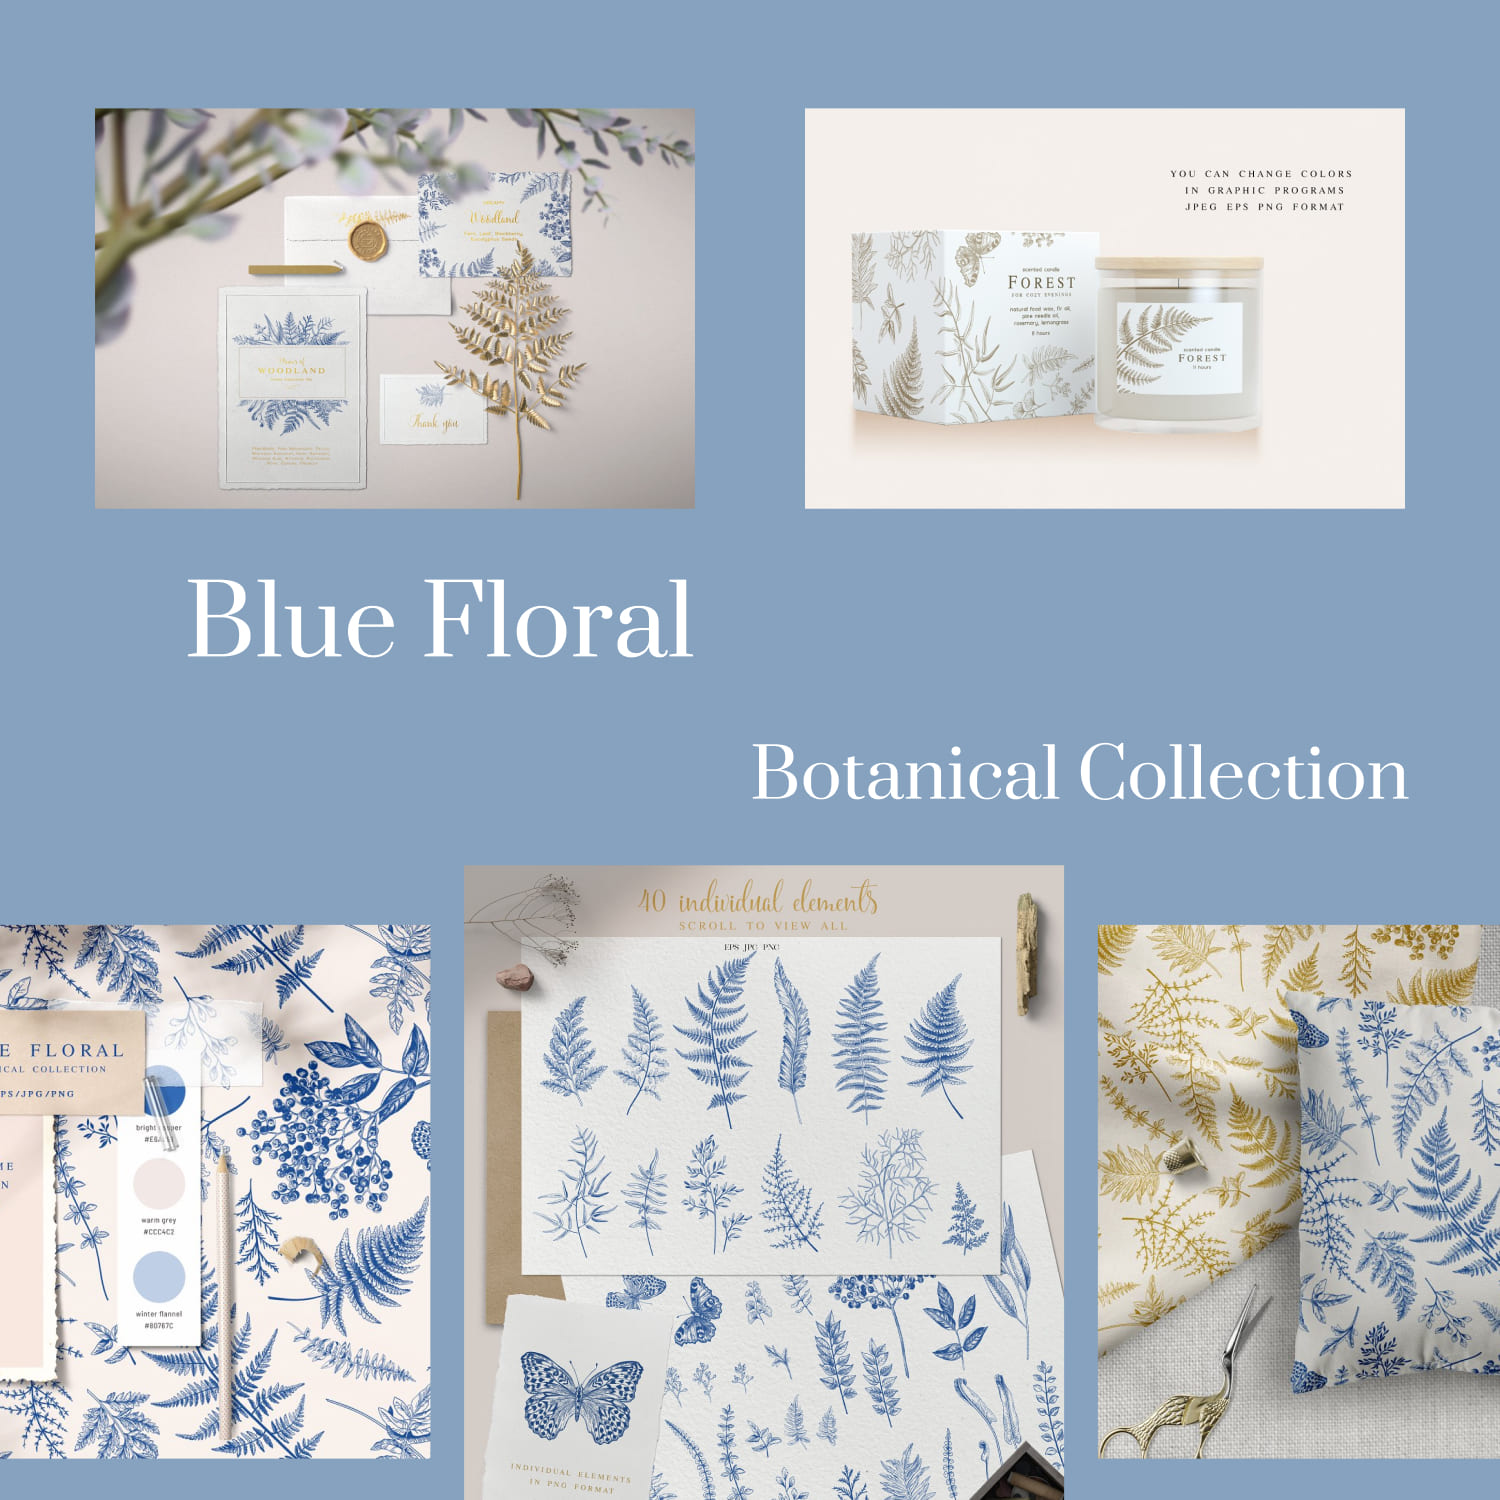 Blue floral. Botanical collection.